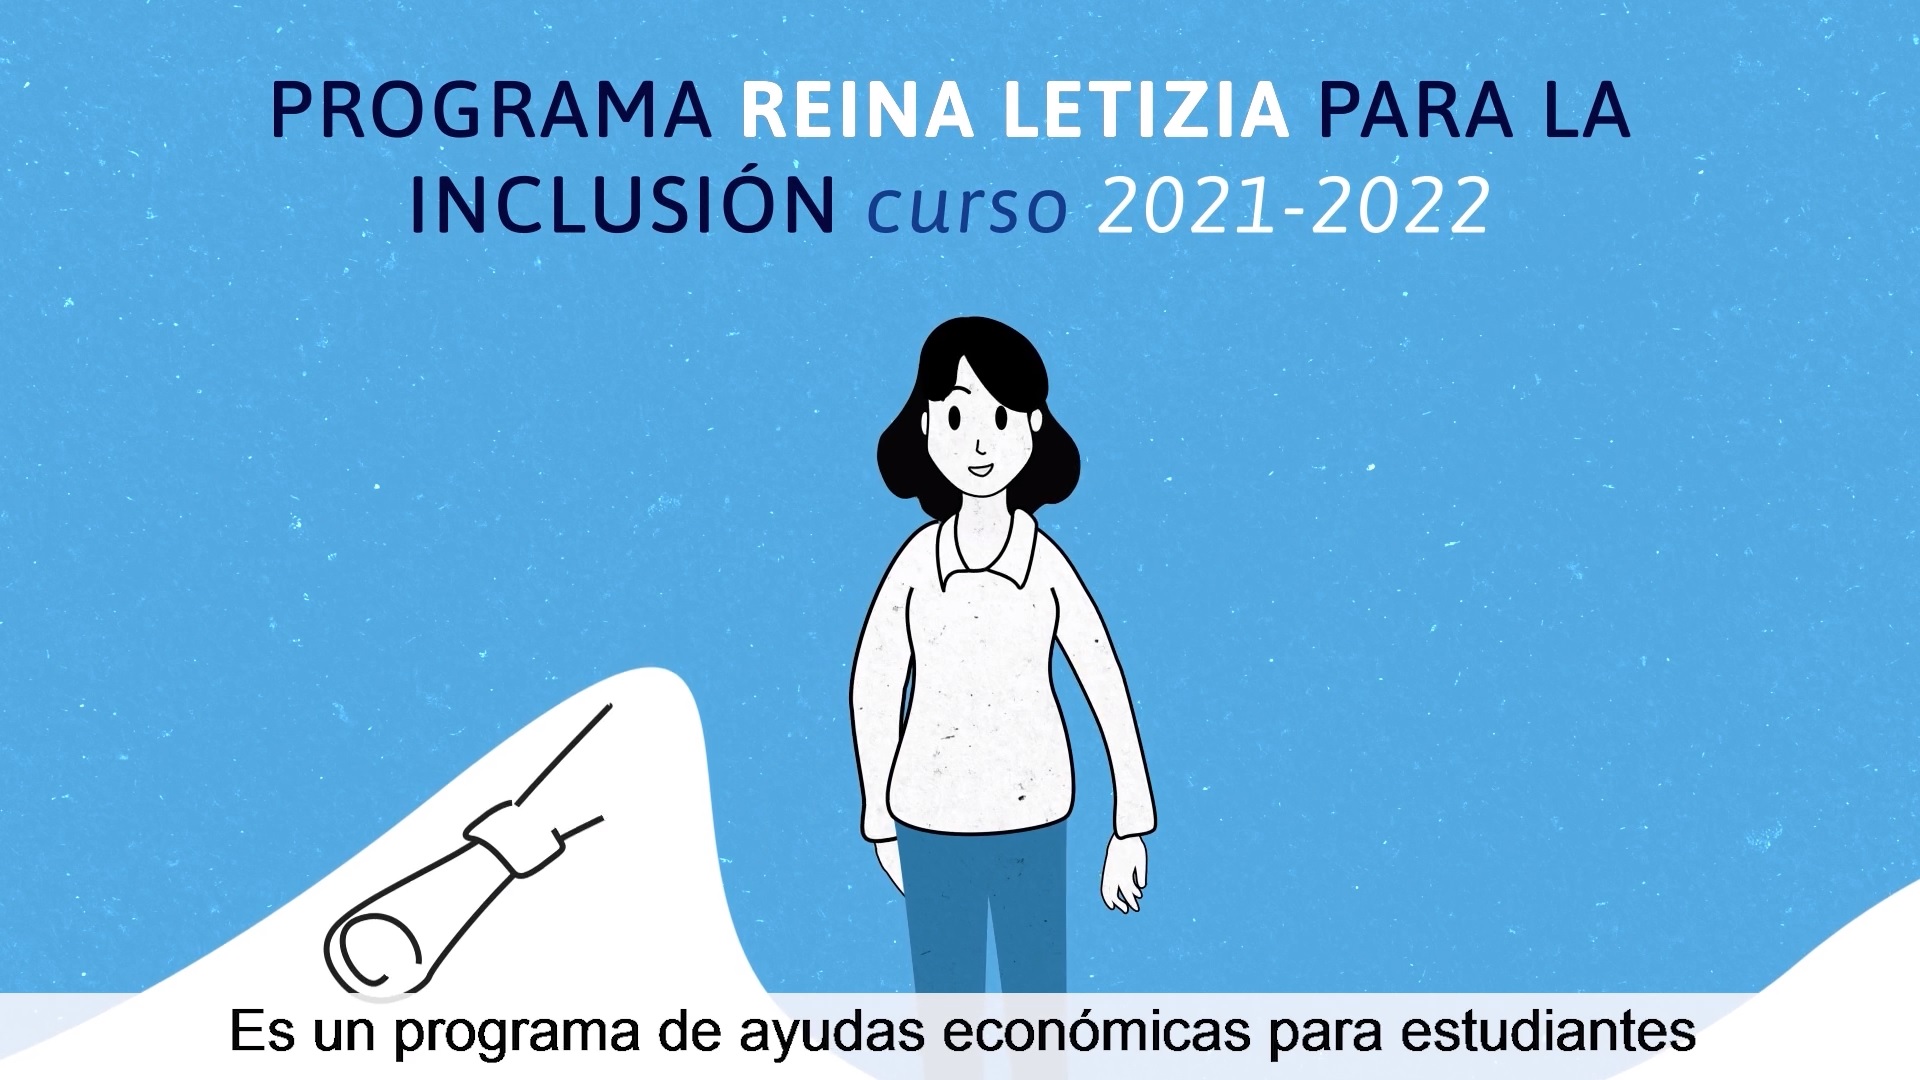 Vdeo explicativo del Programa Reina Letizia para la Inclusin Curso 2021-2022